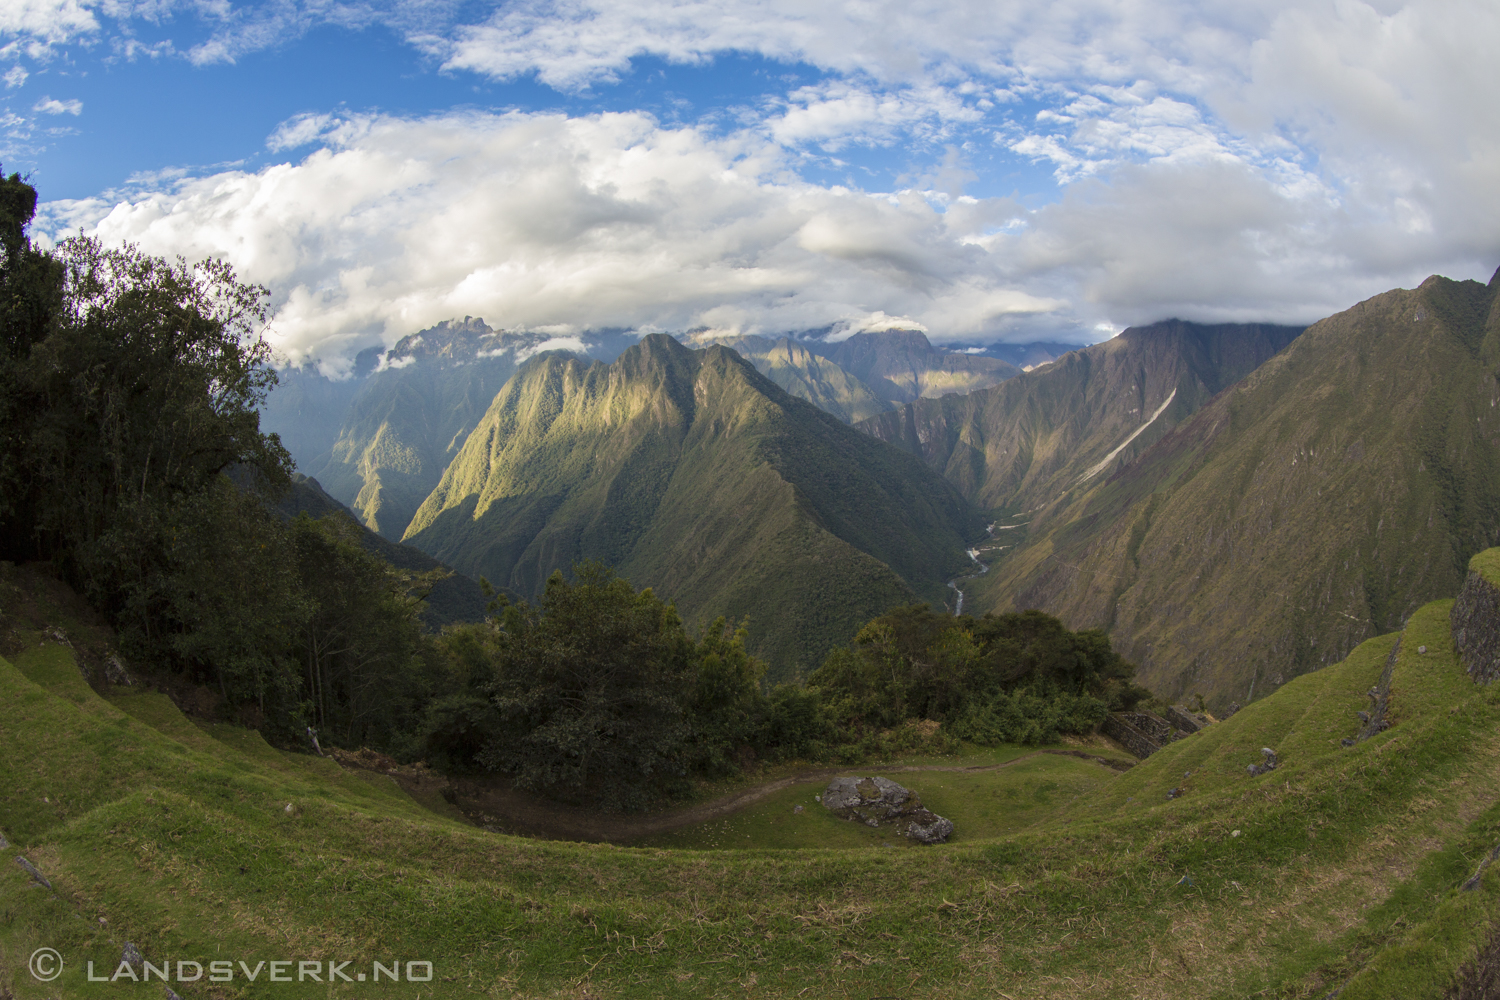 Walking the Inka Trail to Machu Picchu, Peru. Overlooking the Machu Picchu mountain and the Urubamba river. 

(Canon EOS 5D Mark III / Canon EF 8-15mm 
f/4 L USM Fisheye)